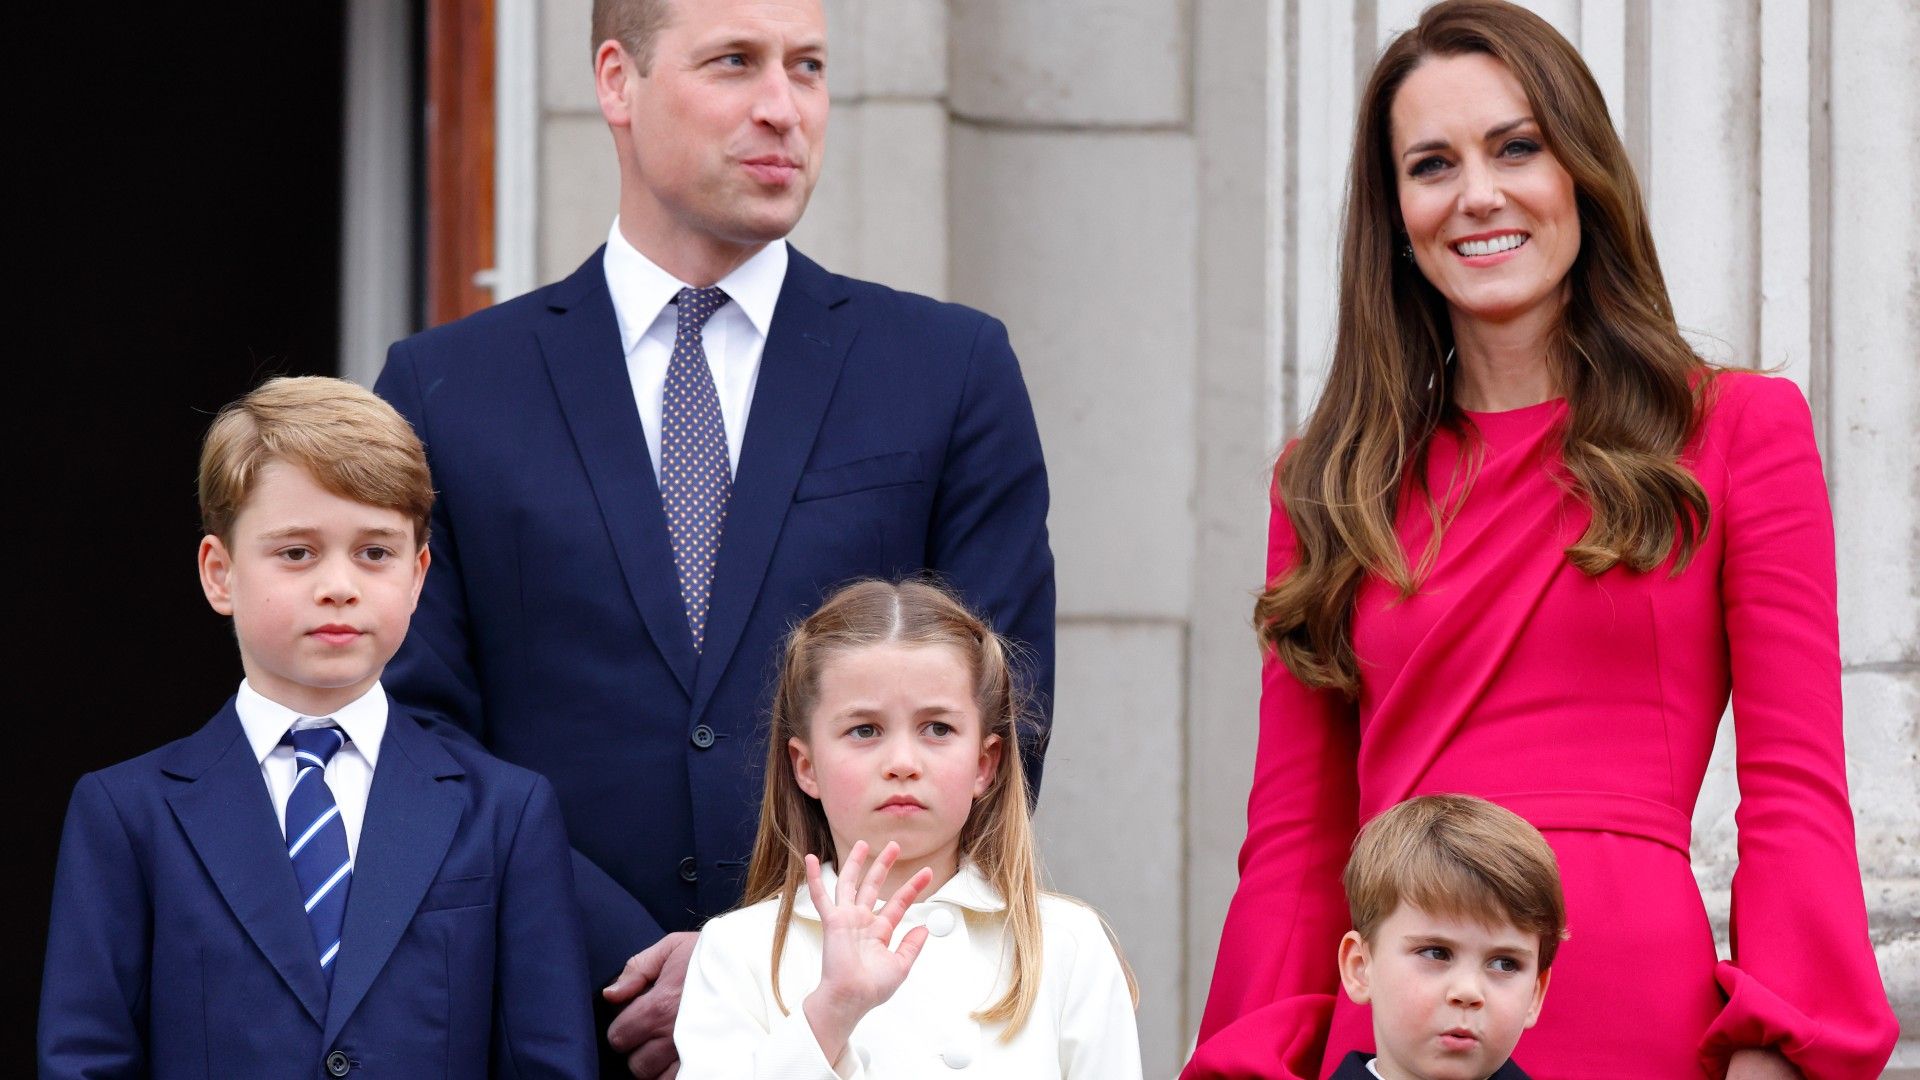 Kate Middleton and Prince William. Дети Кейт Миддлтон и принца Уильяма. Принц Уильям 2022. Кейт Миддлтон с детьми.